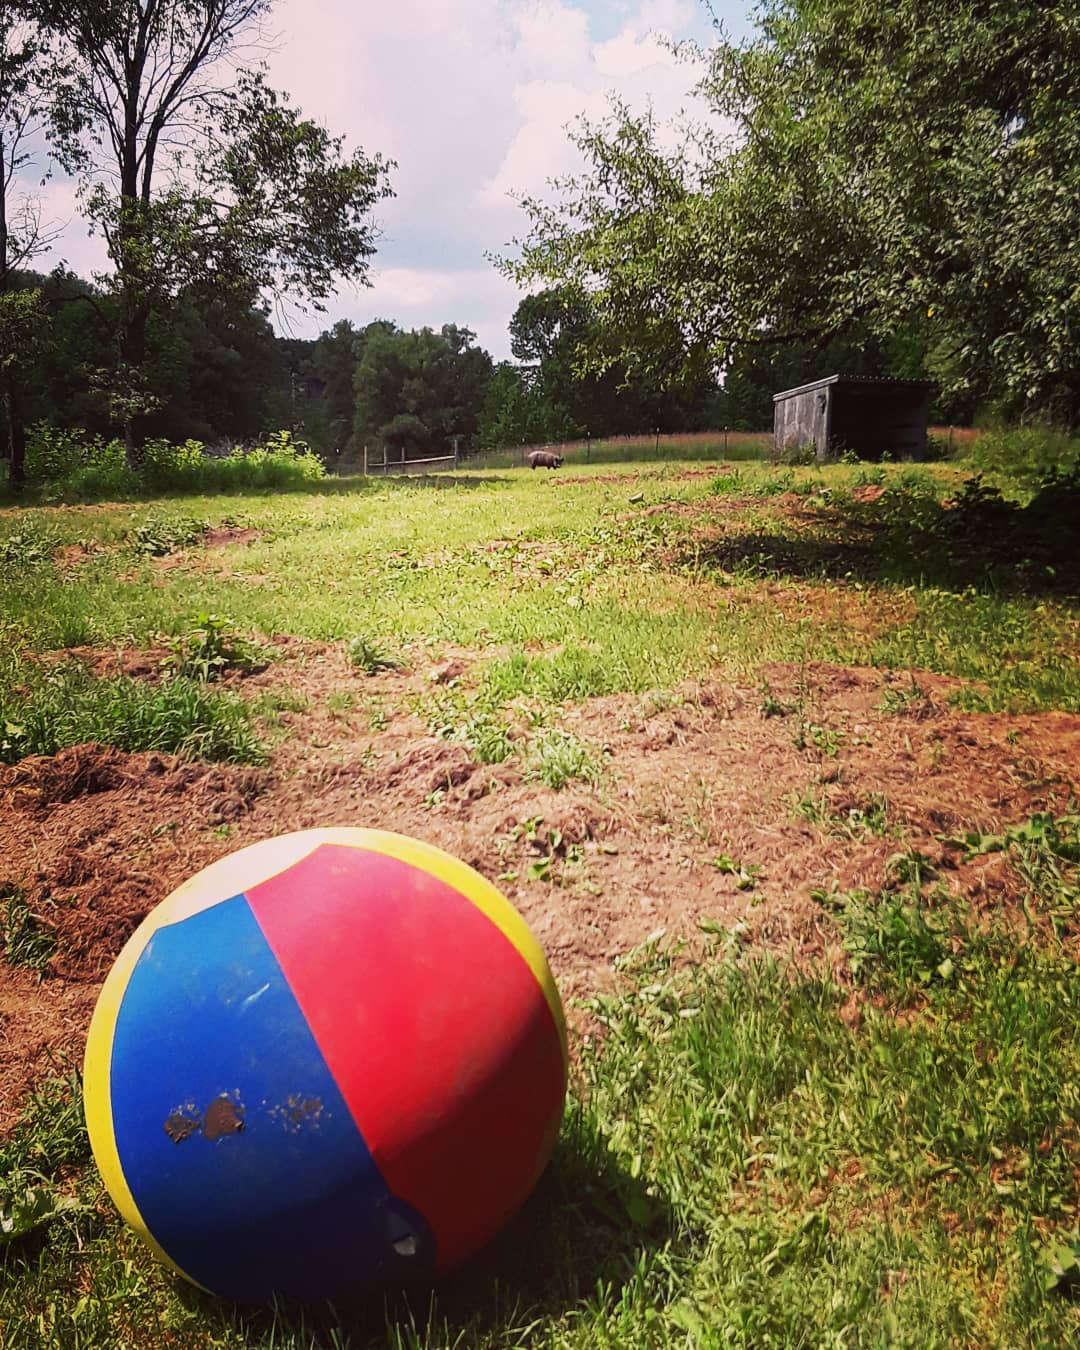 A ball in a field